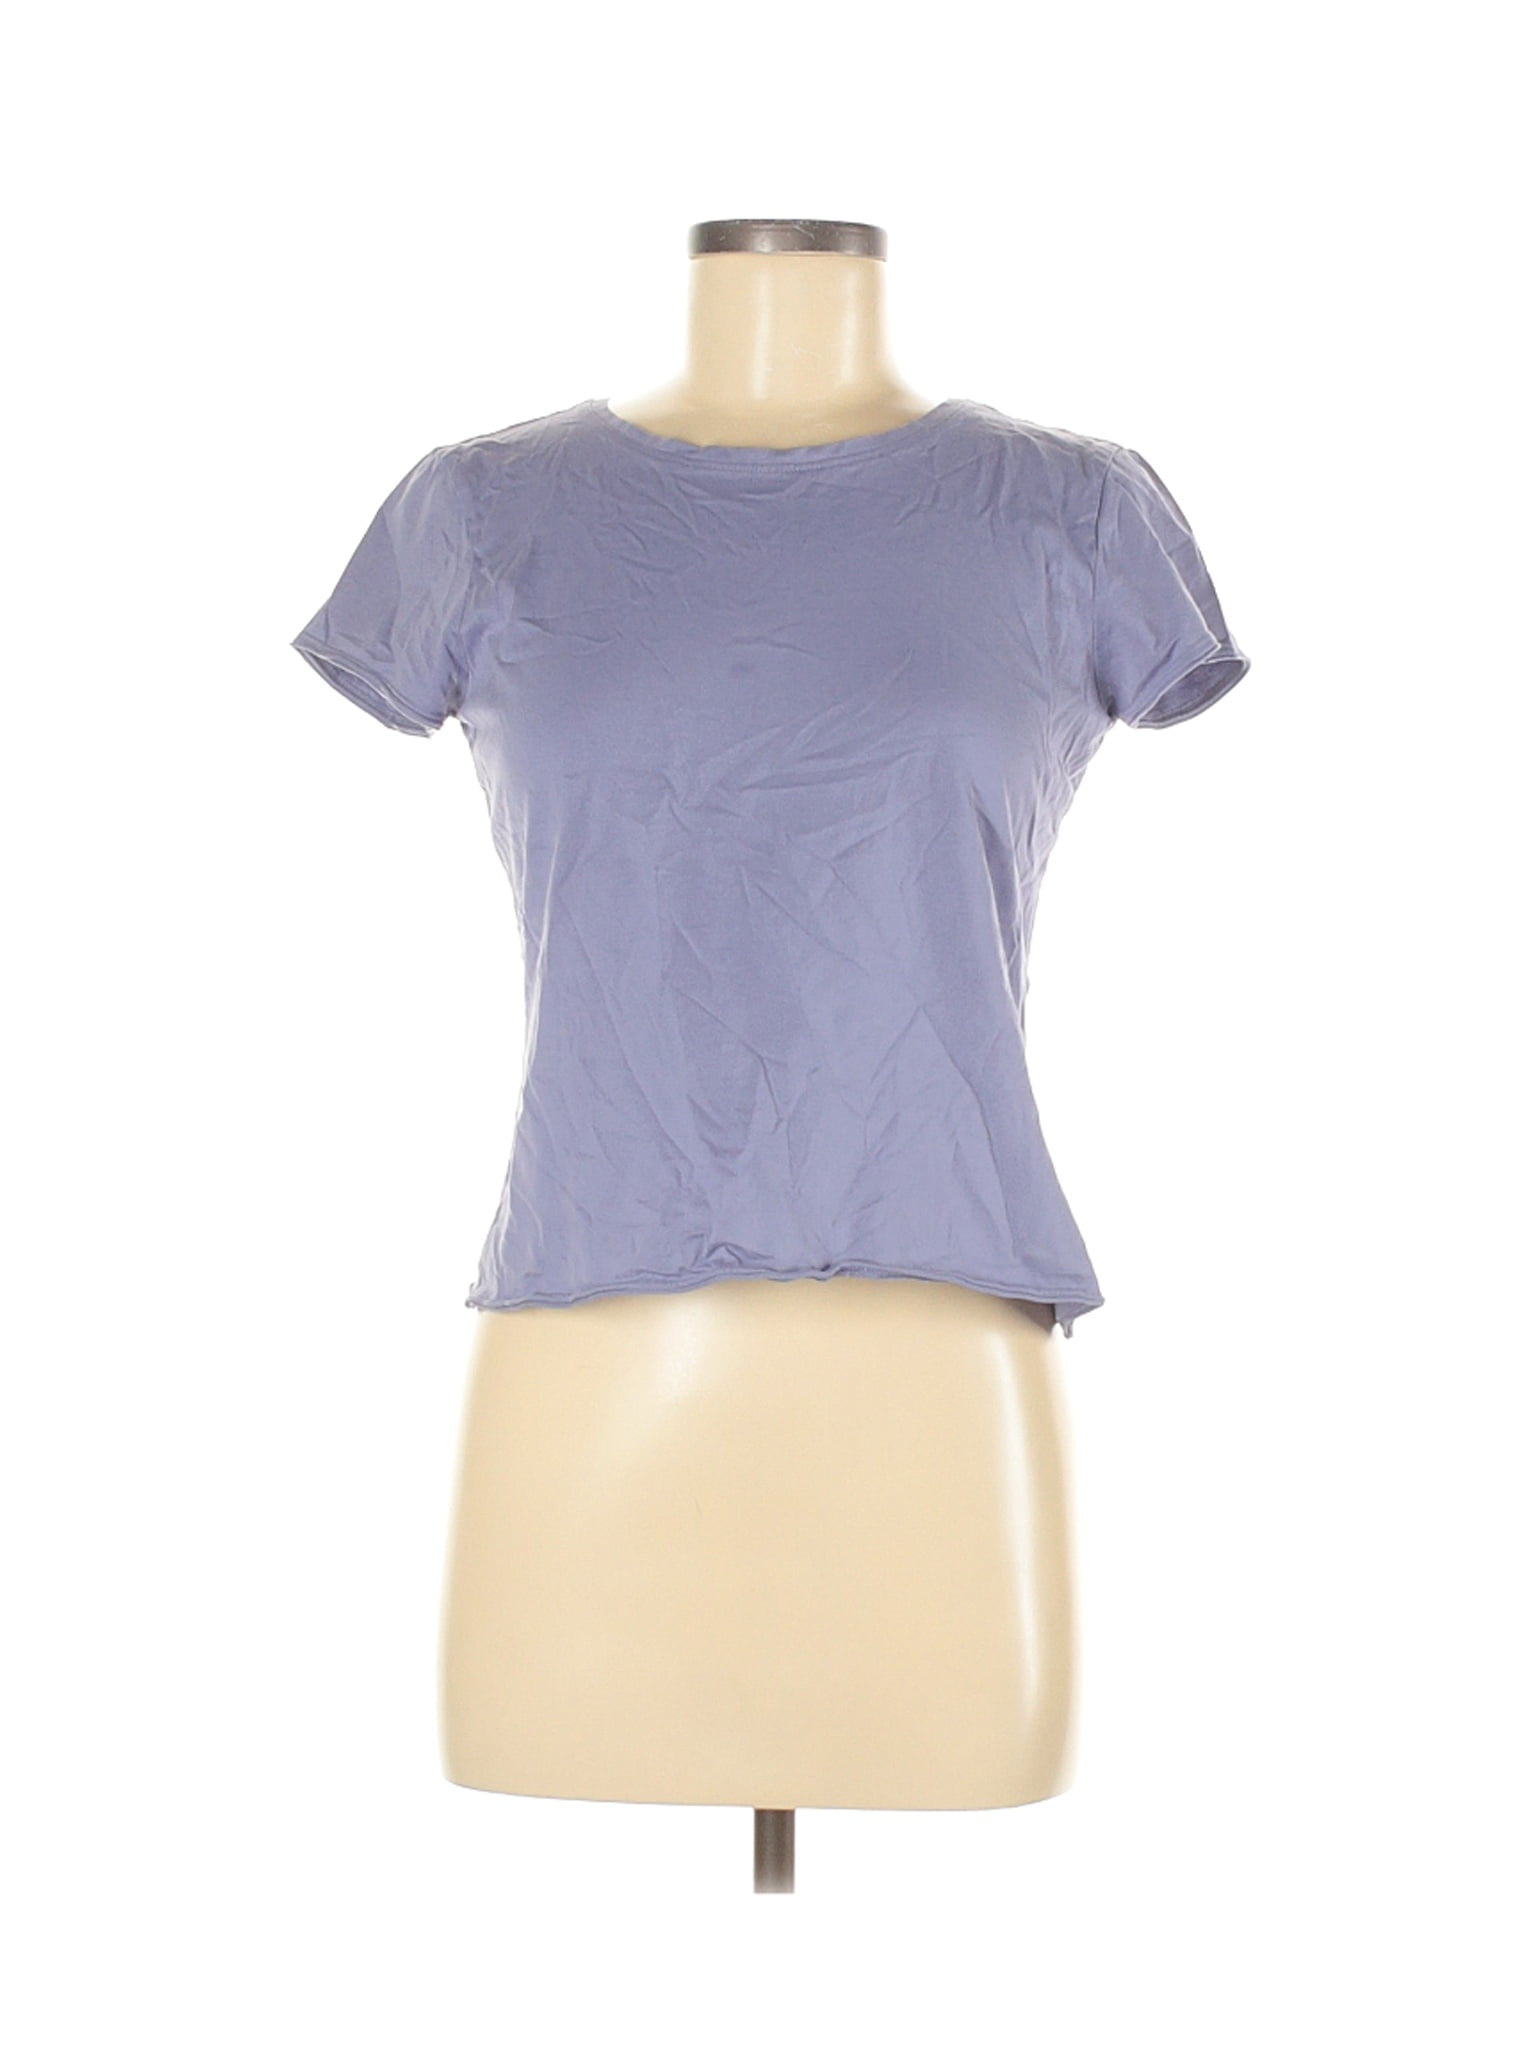 J.jill - Pre-Owned J.jill Women's Size M Petite Short Sleeve T-Shirt ...